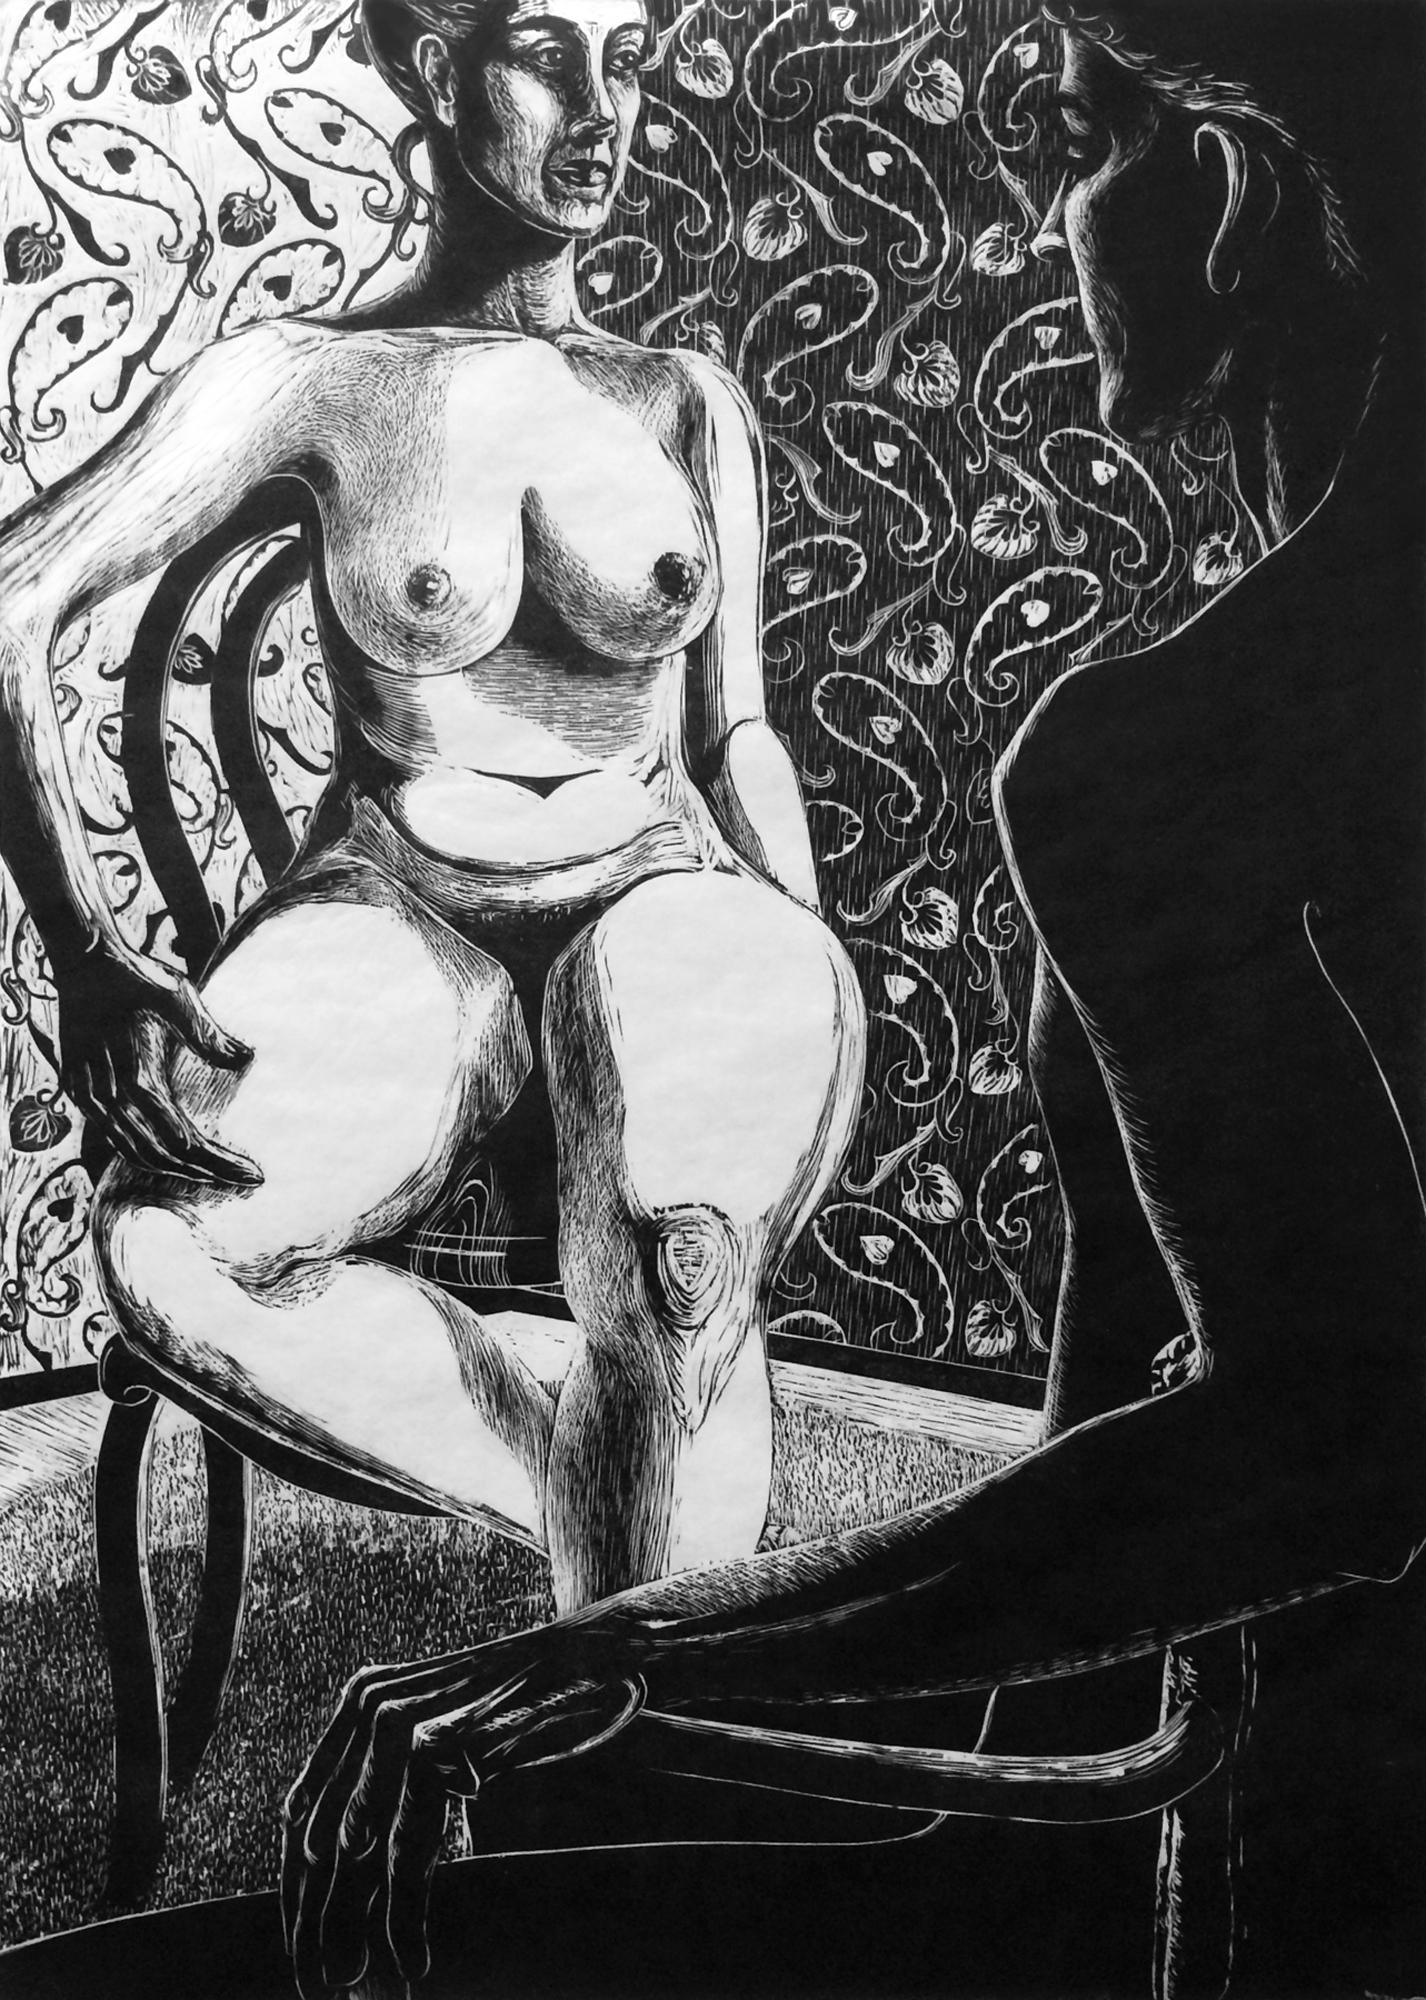 Yin Yang (woodcut, hand-pulled print, black and white, figurative, patterned BG)